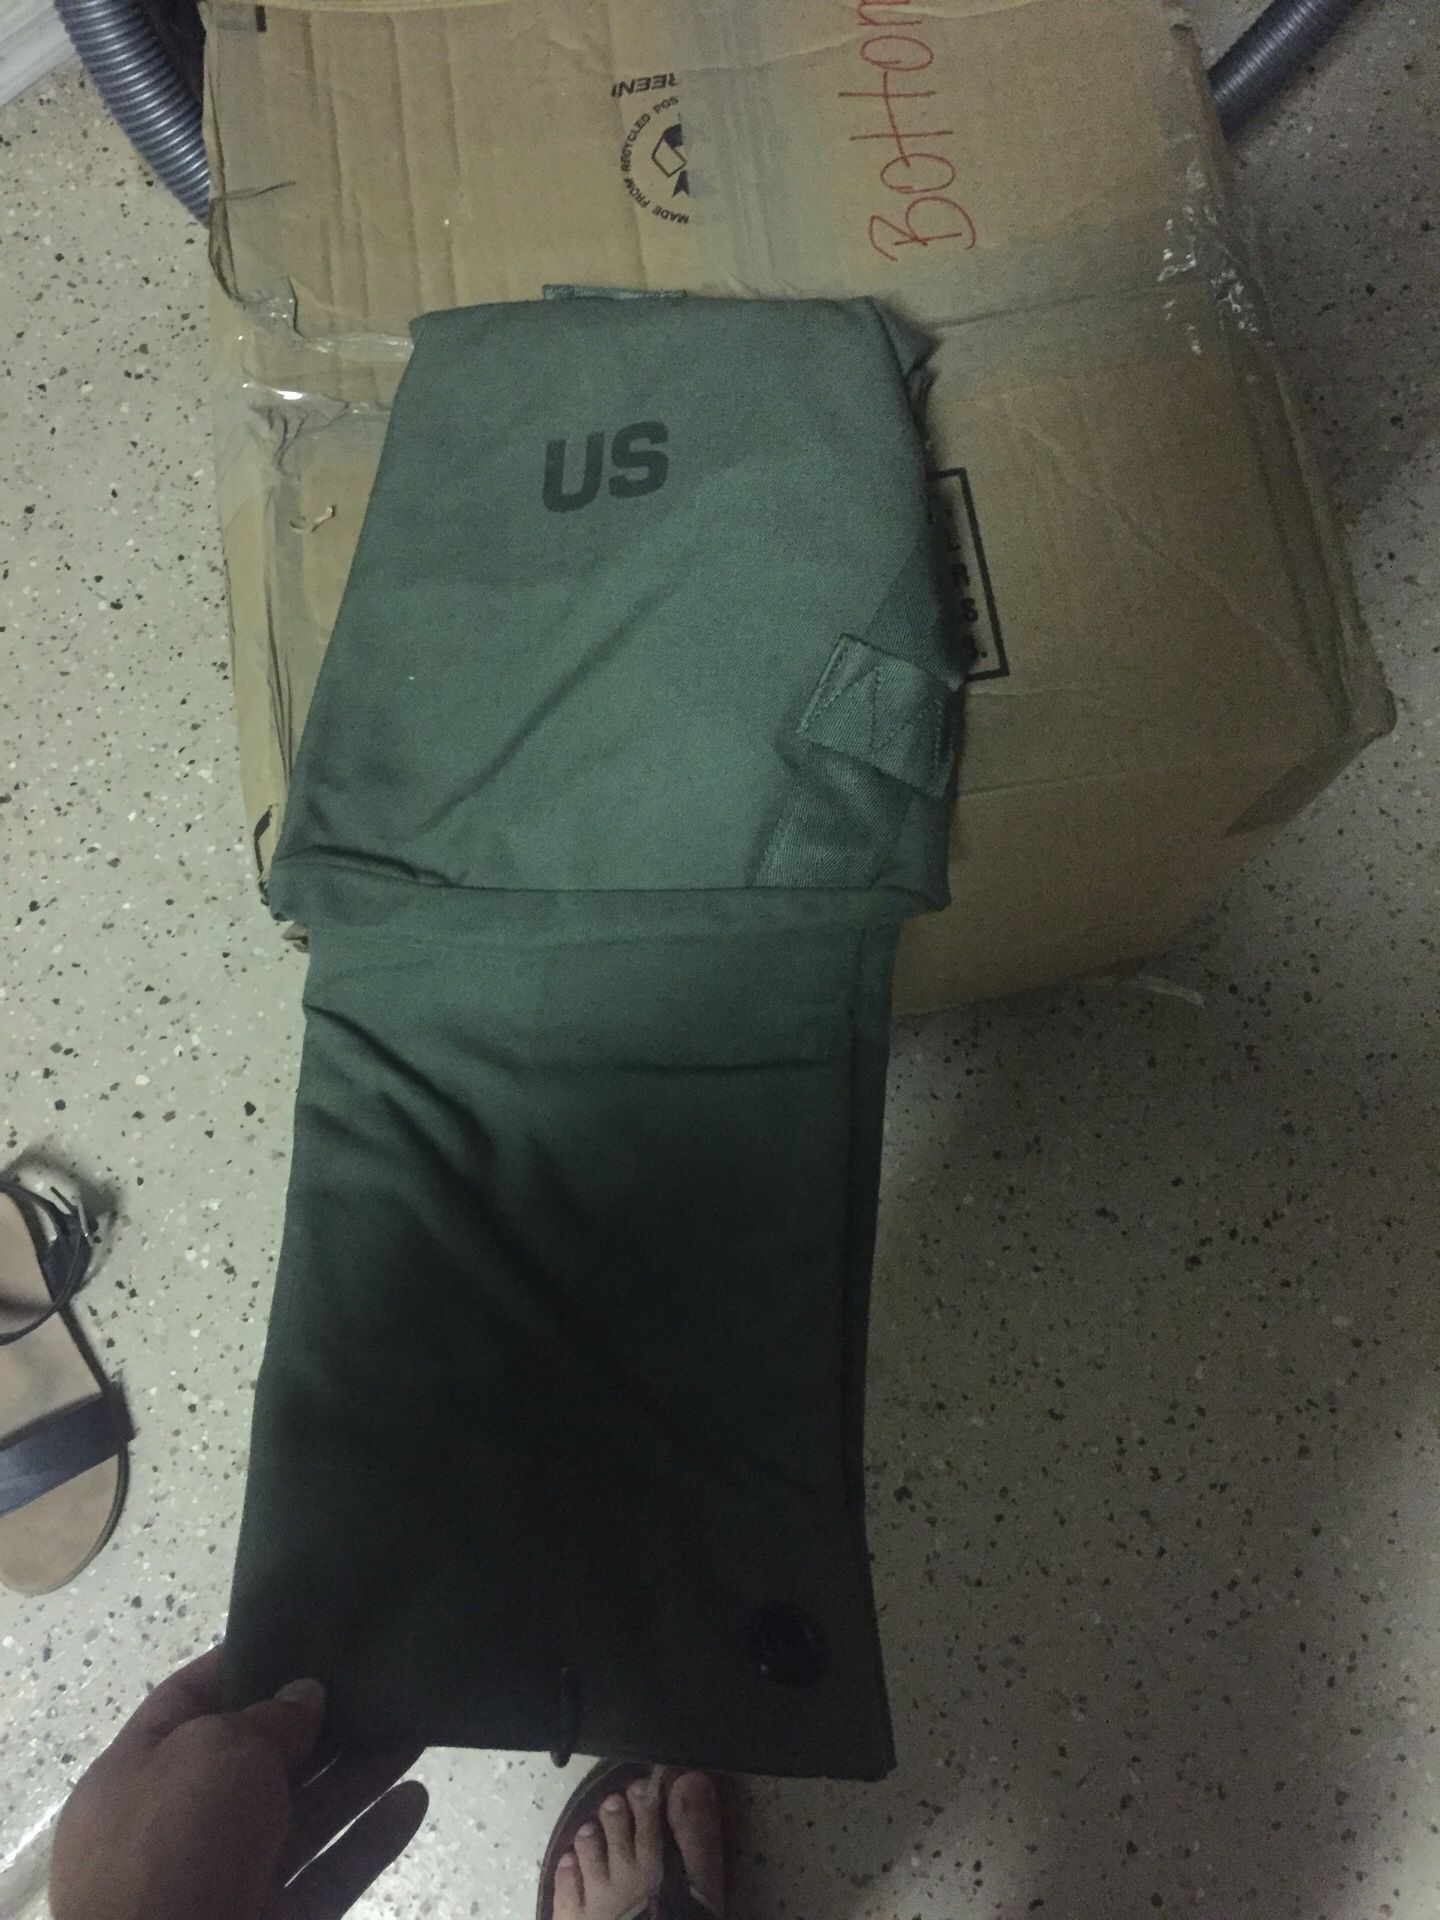 US military duffle bag